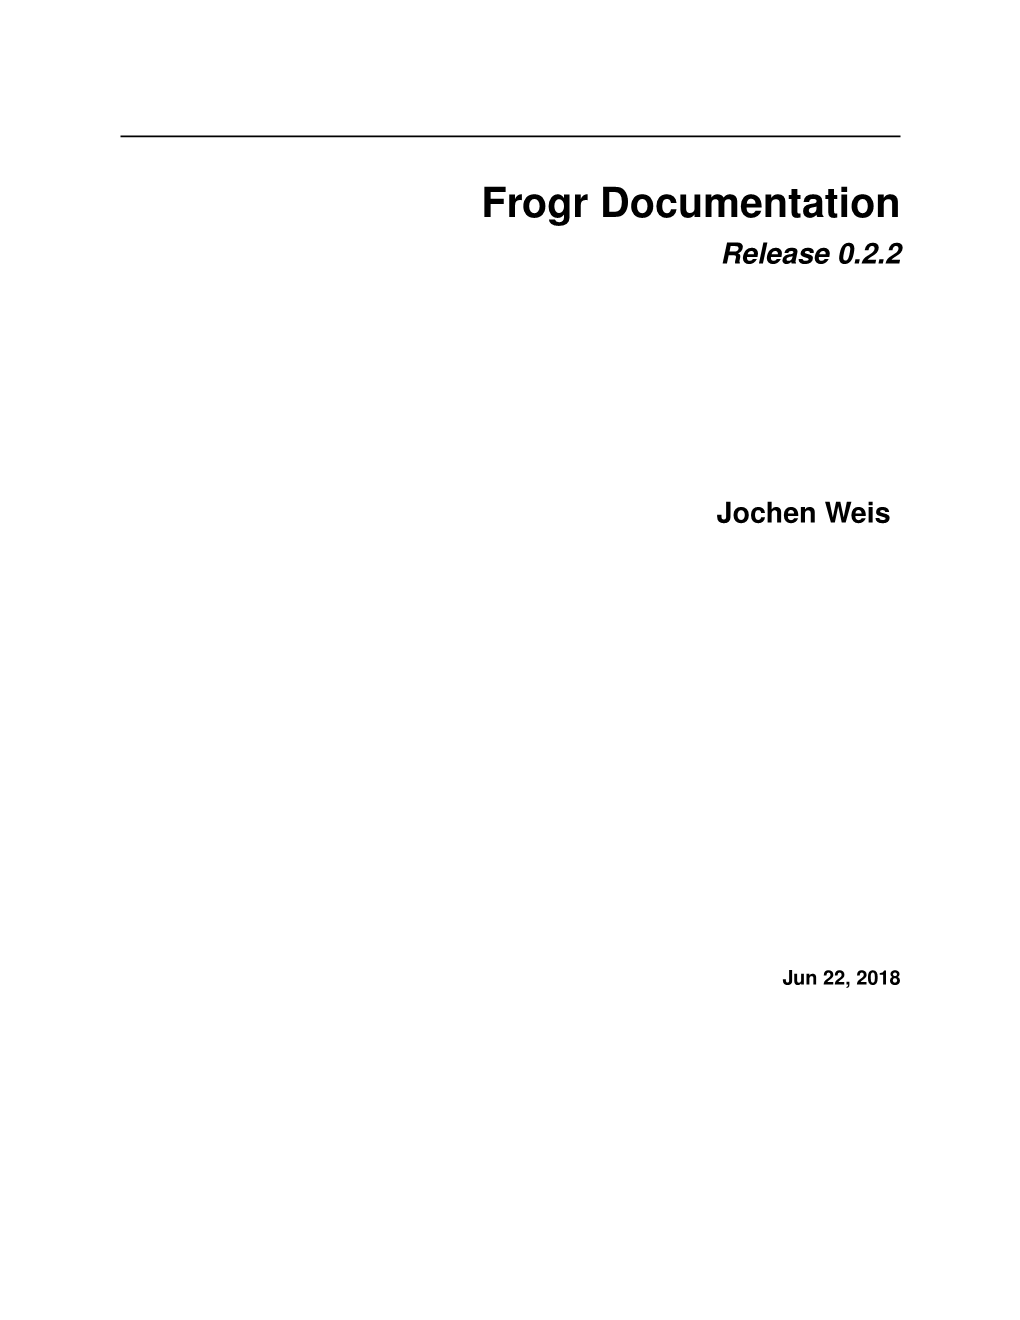 Frogr Documentation Release 0.2.2